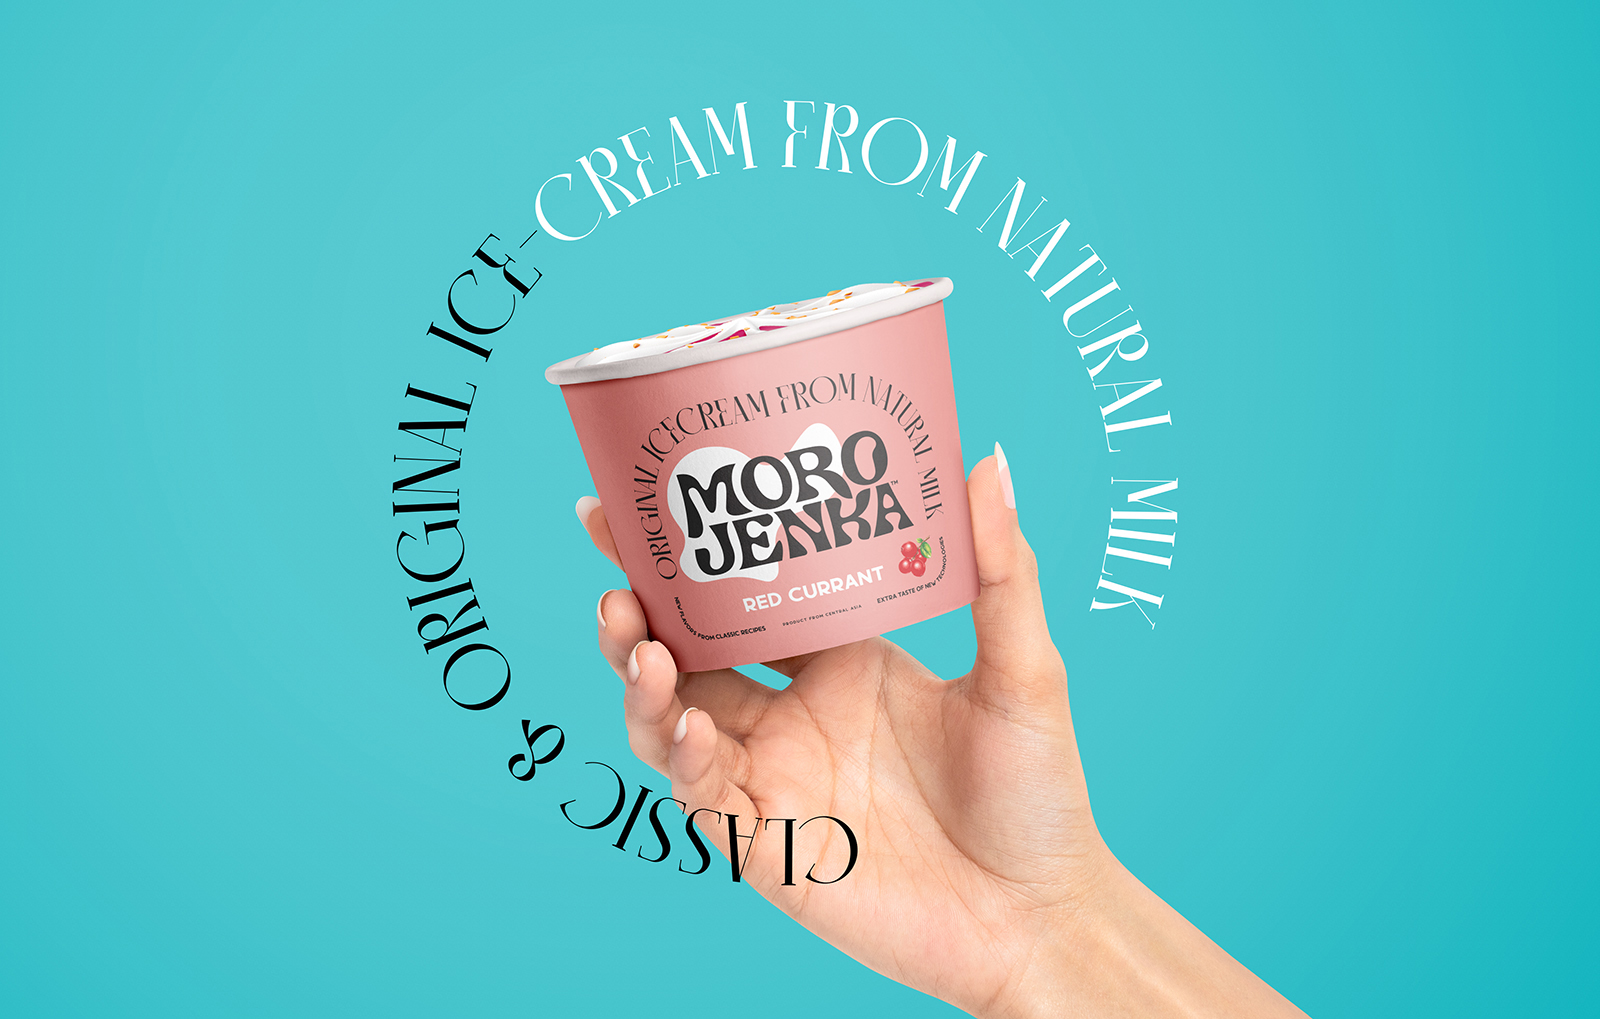 Alexey Lysogorov Designs The Packaging of Morojenka Ice Cream